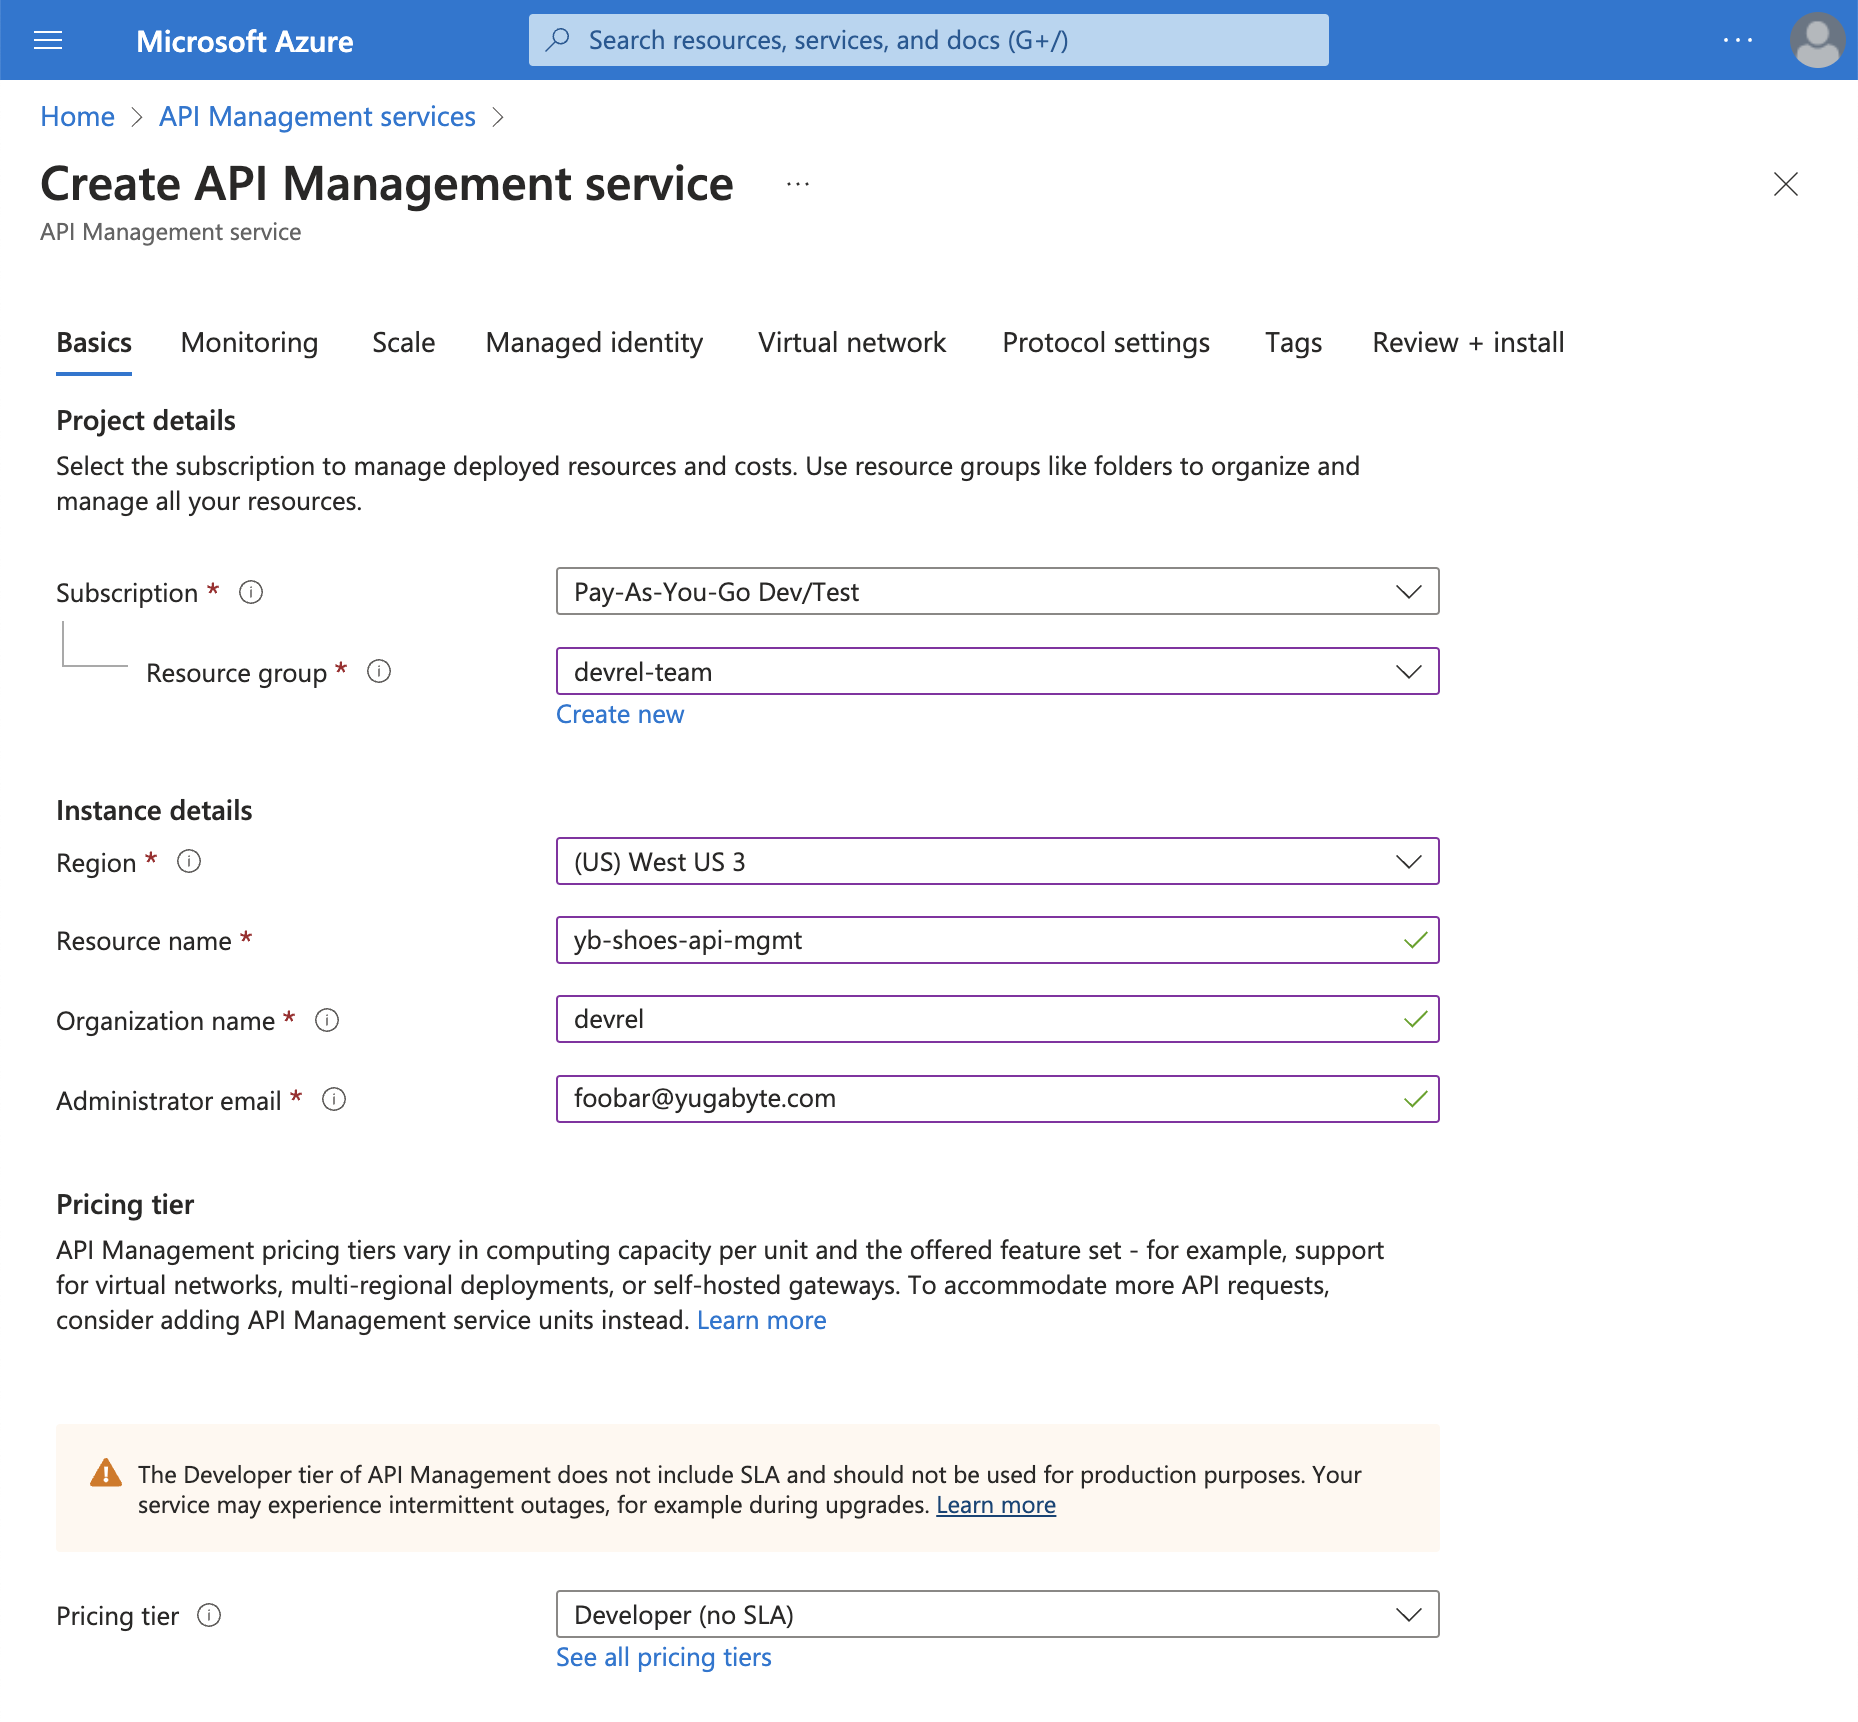 API Management instance in westus3 region